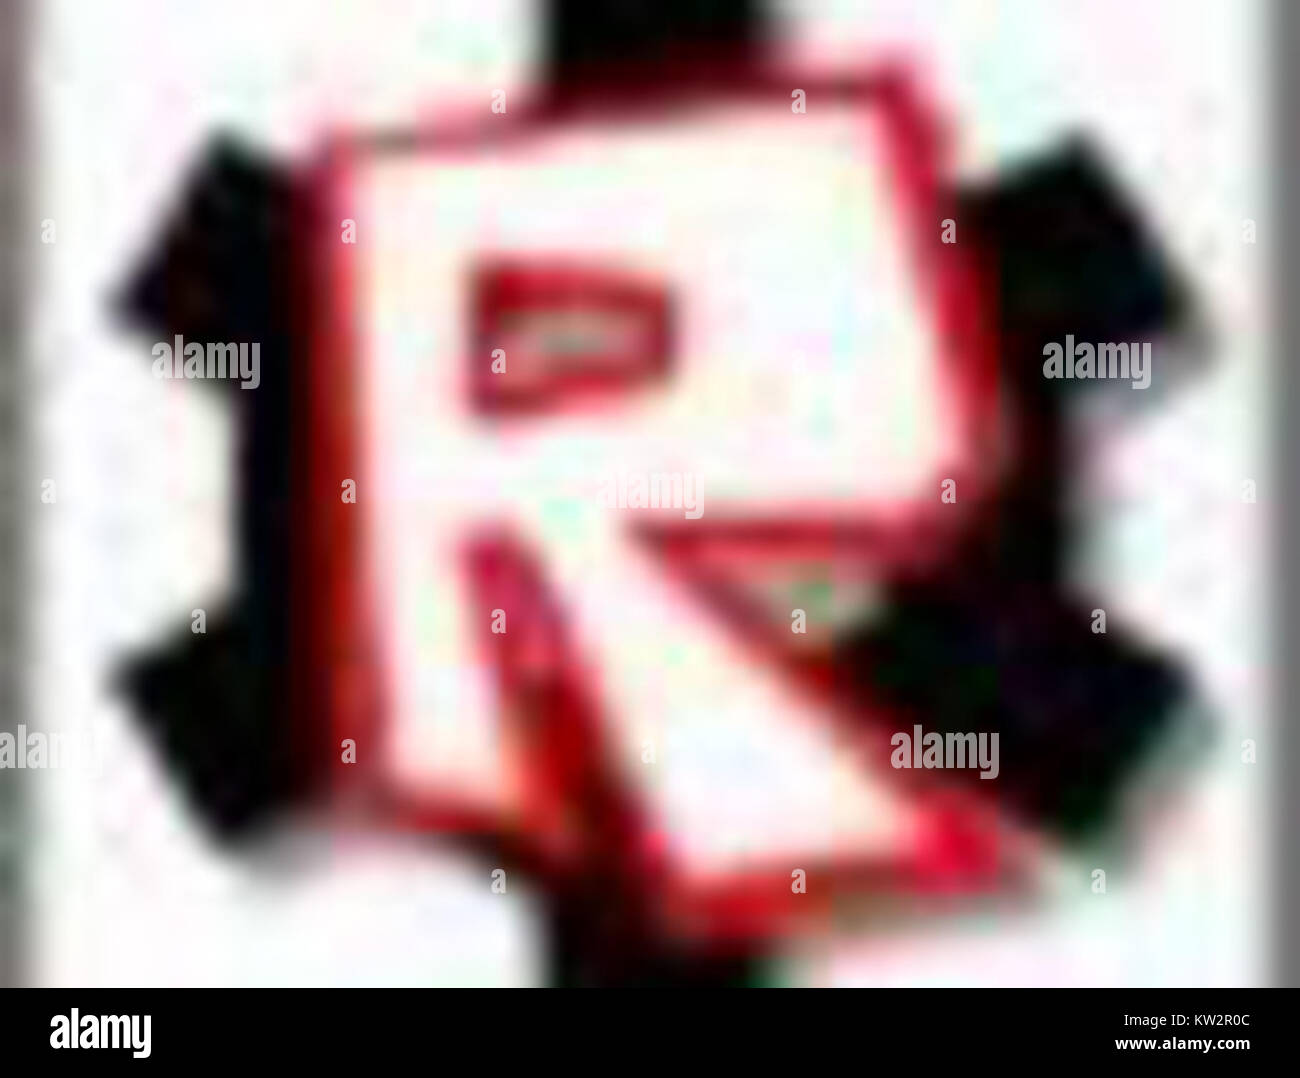 Roblox Logo Brag Stock Photo Alamy - picture of a roblox logo